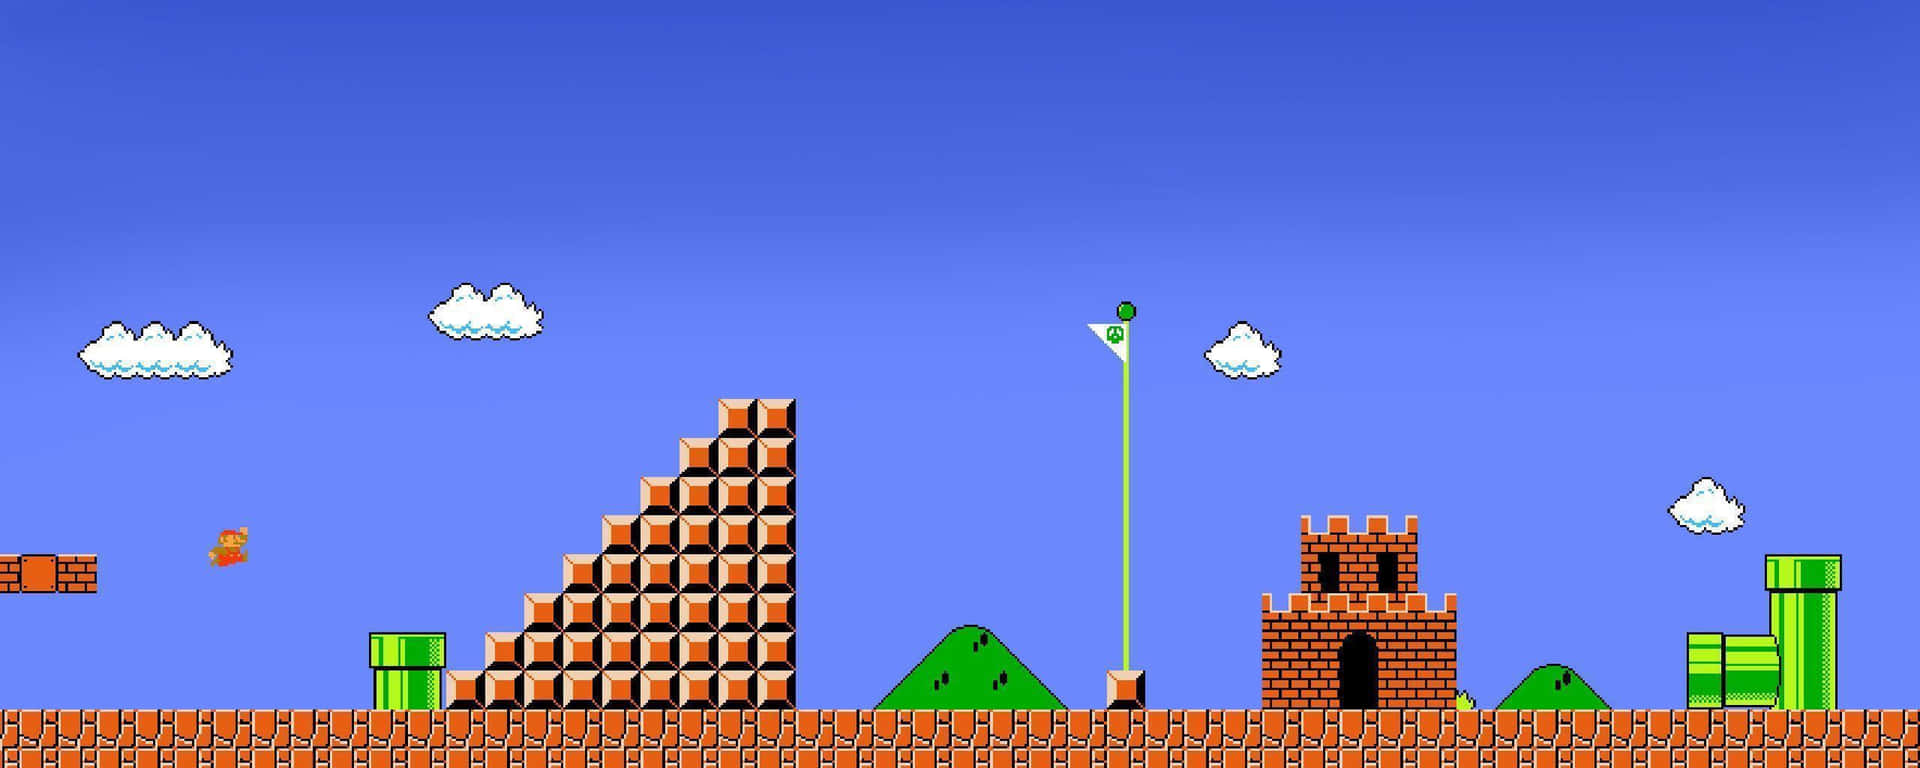 Mario and Luigi adventuring in the Mushroom Kingdom